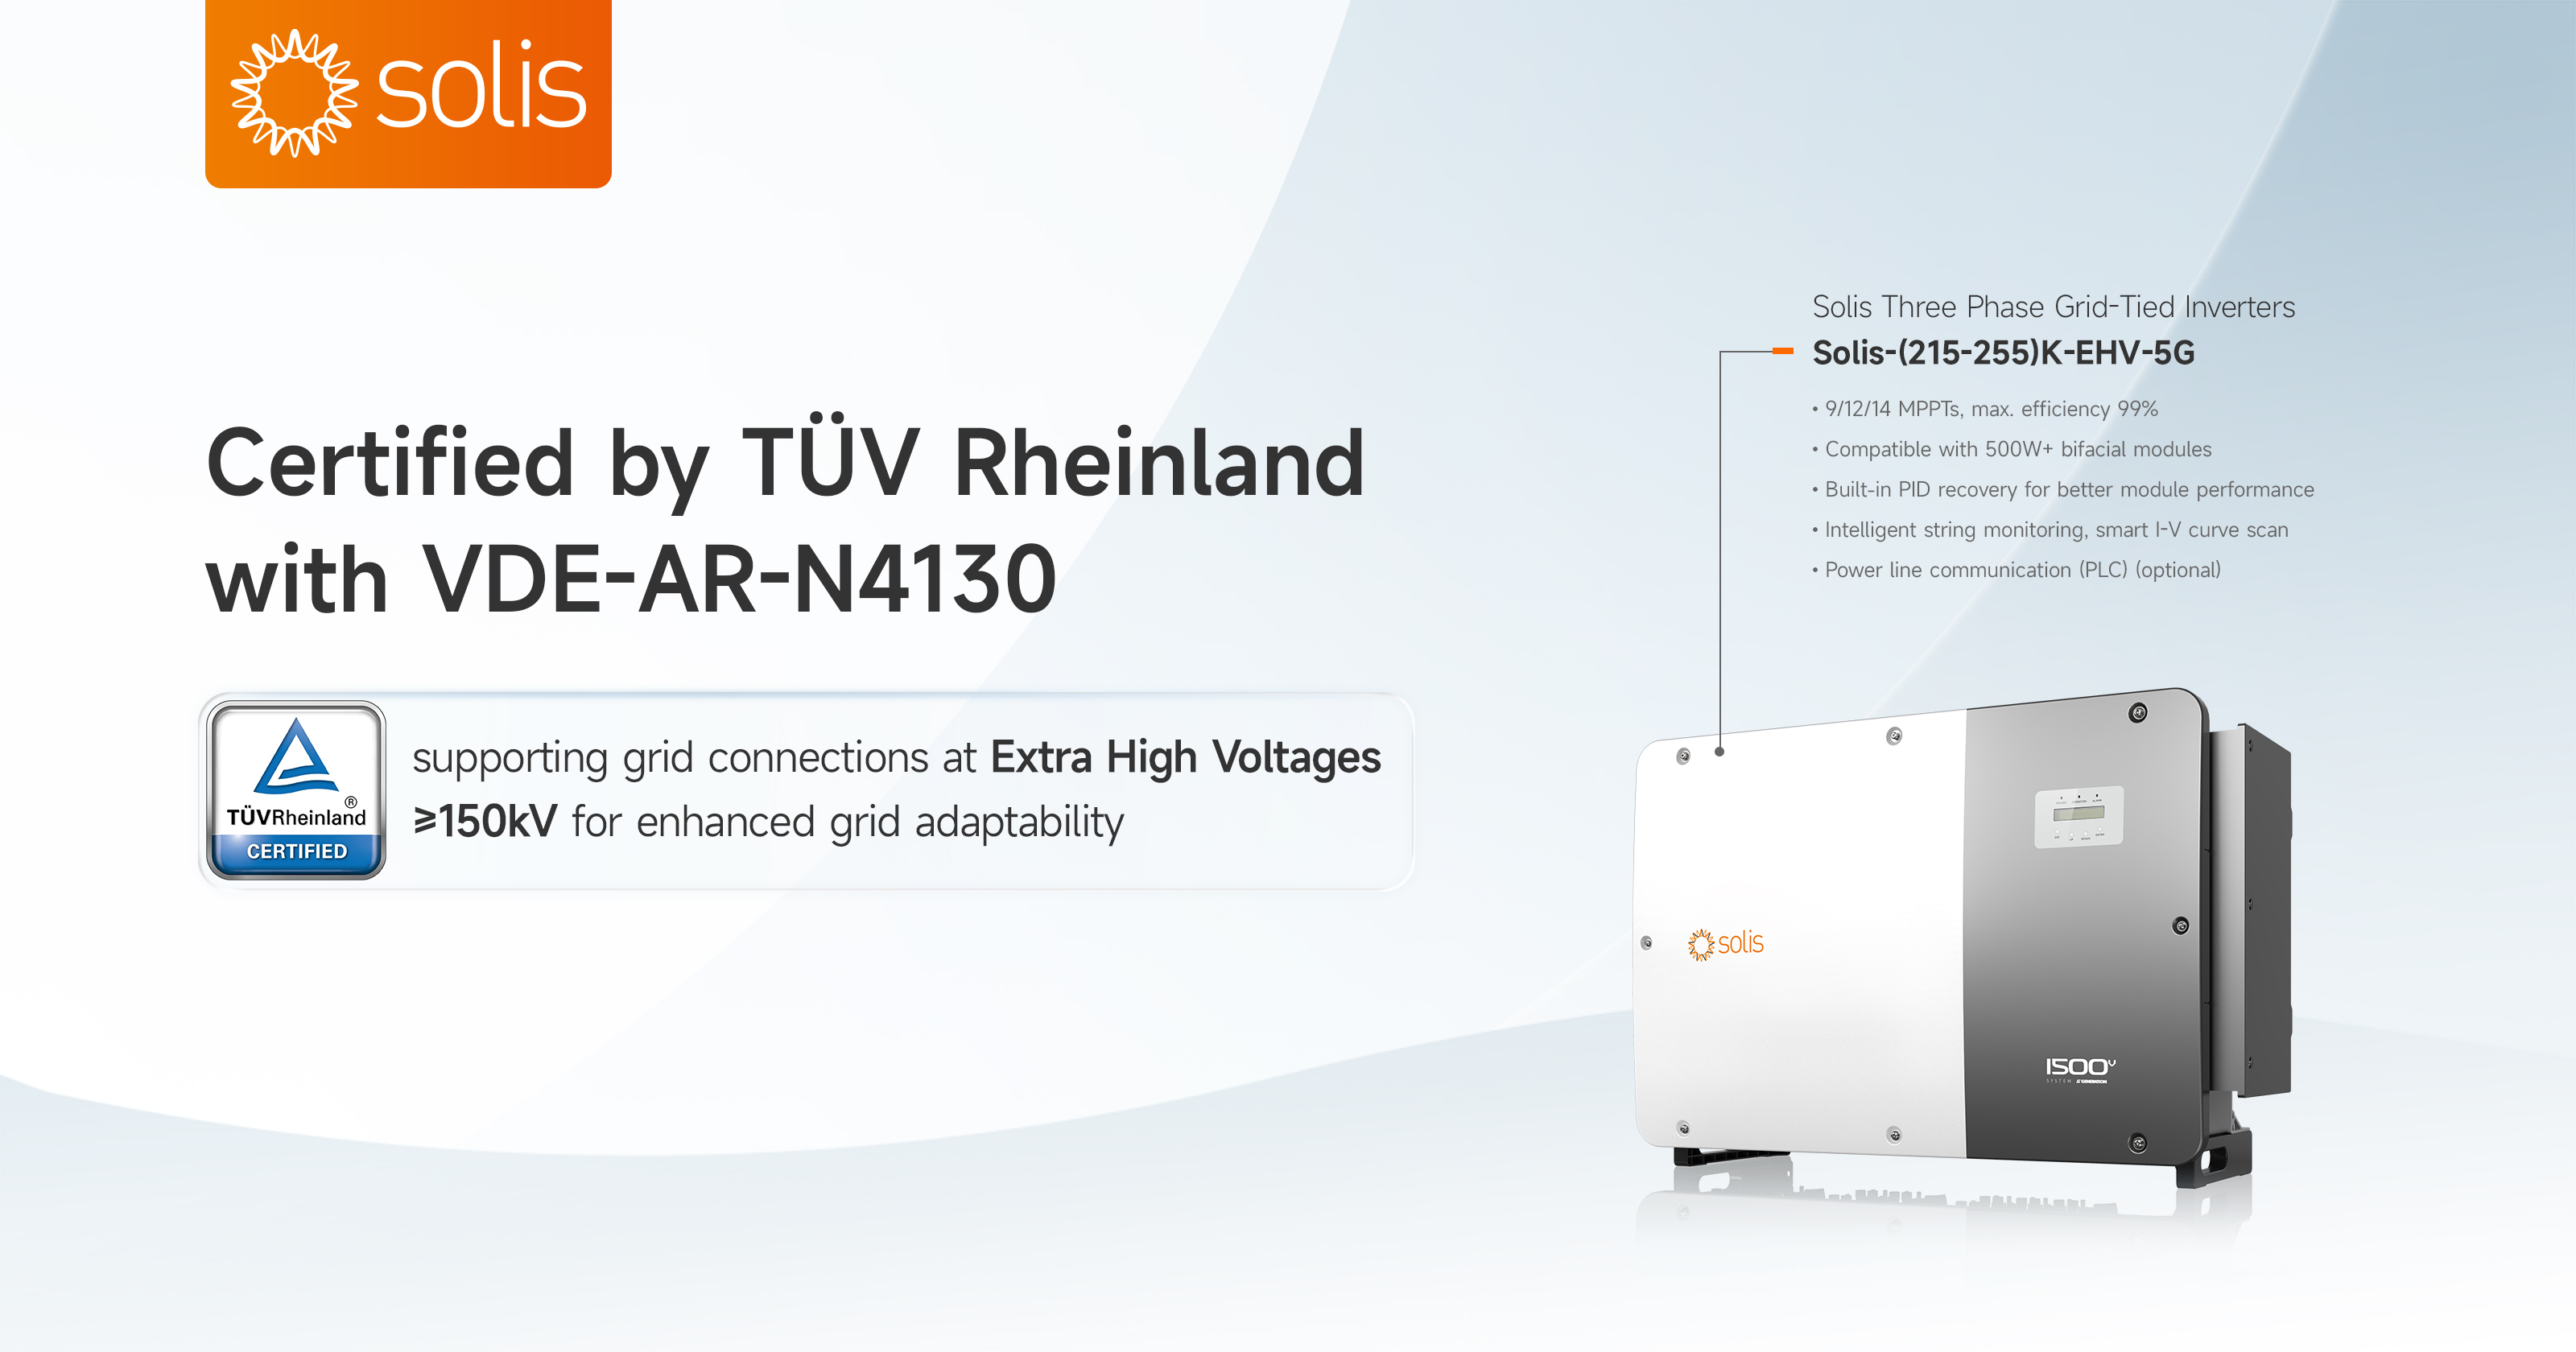 Solis 255kW Inverter Receives Landmark Certification from TÜV Rheinland